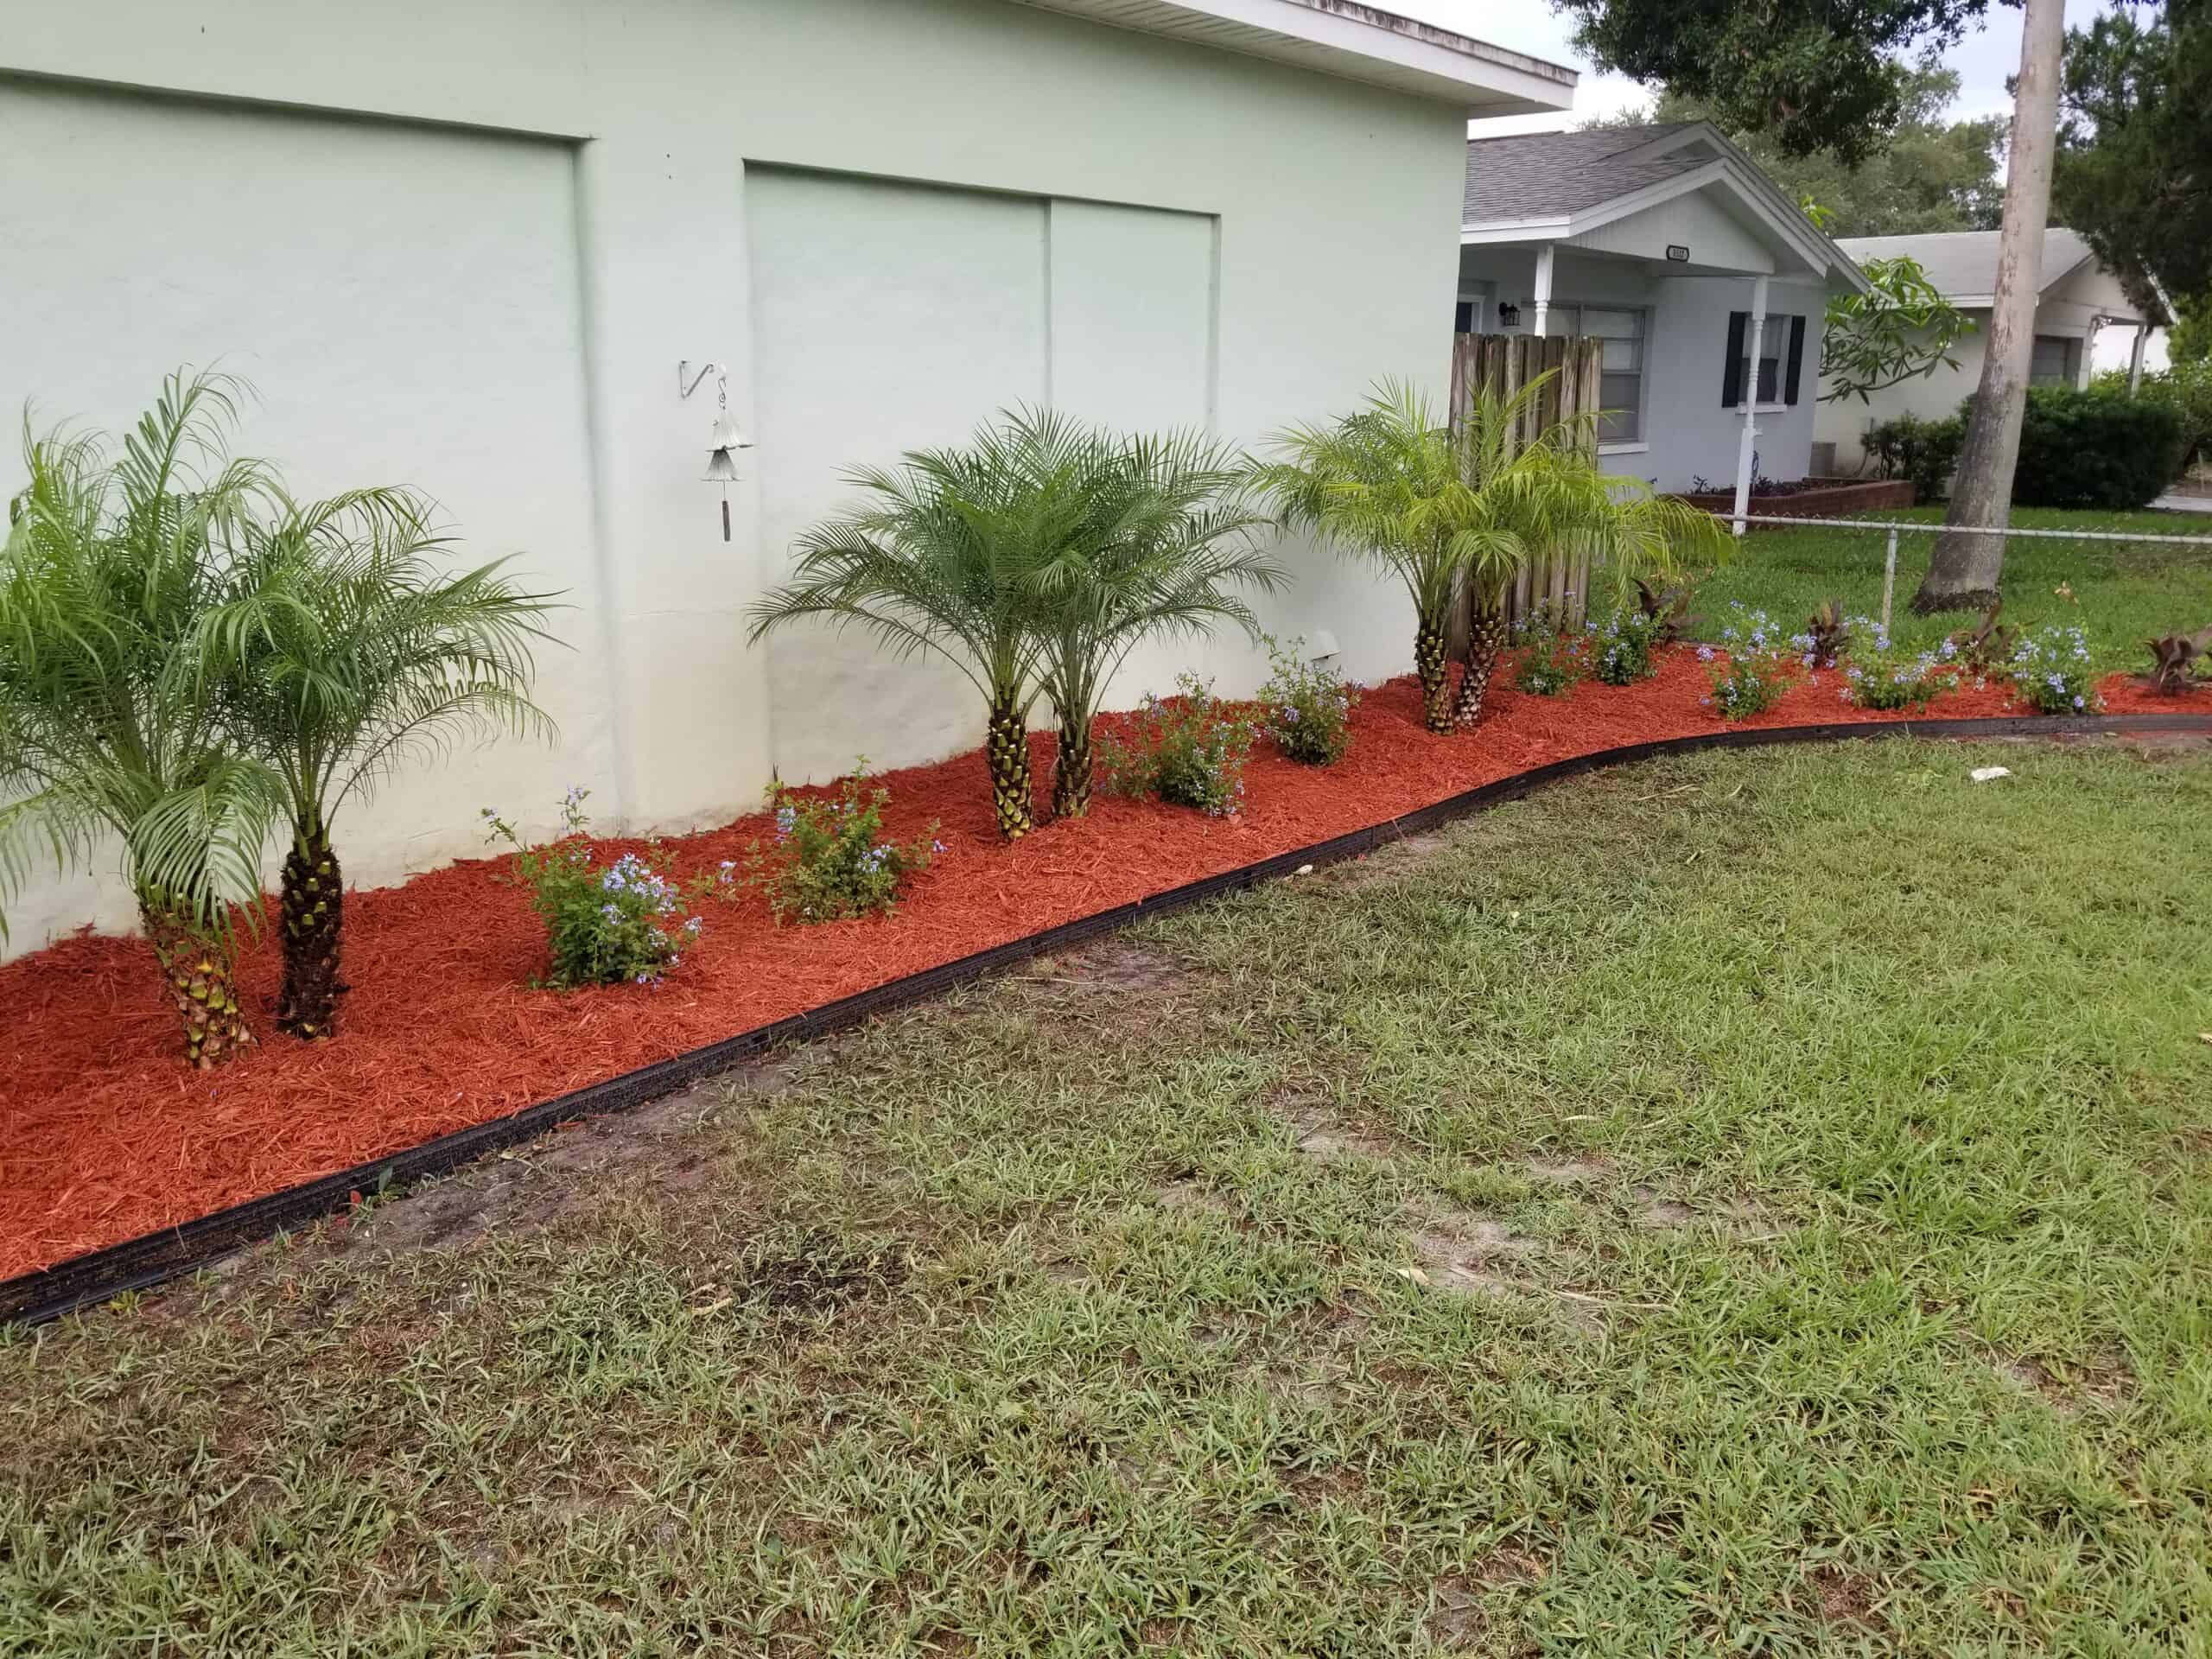 Luxurious Lawn Maintenance in Gulfport, FL